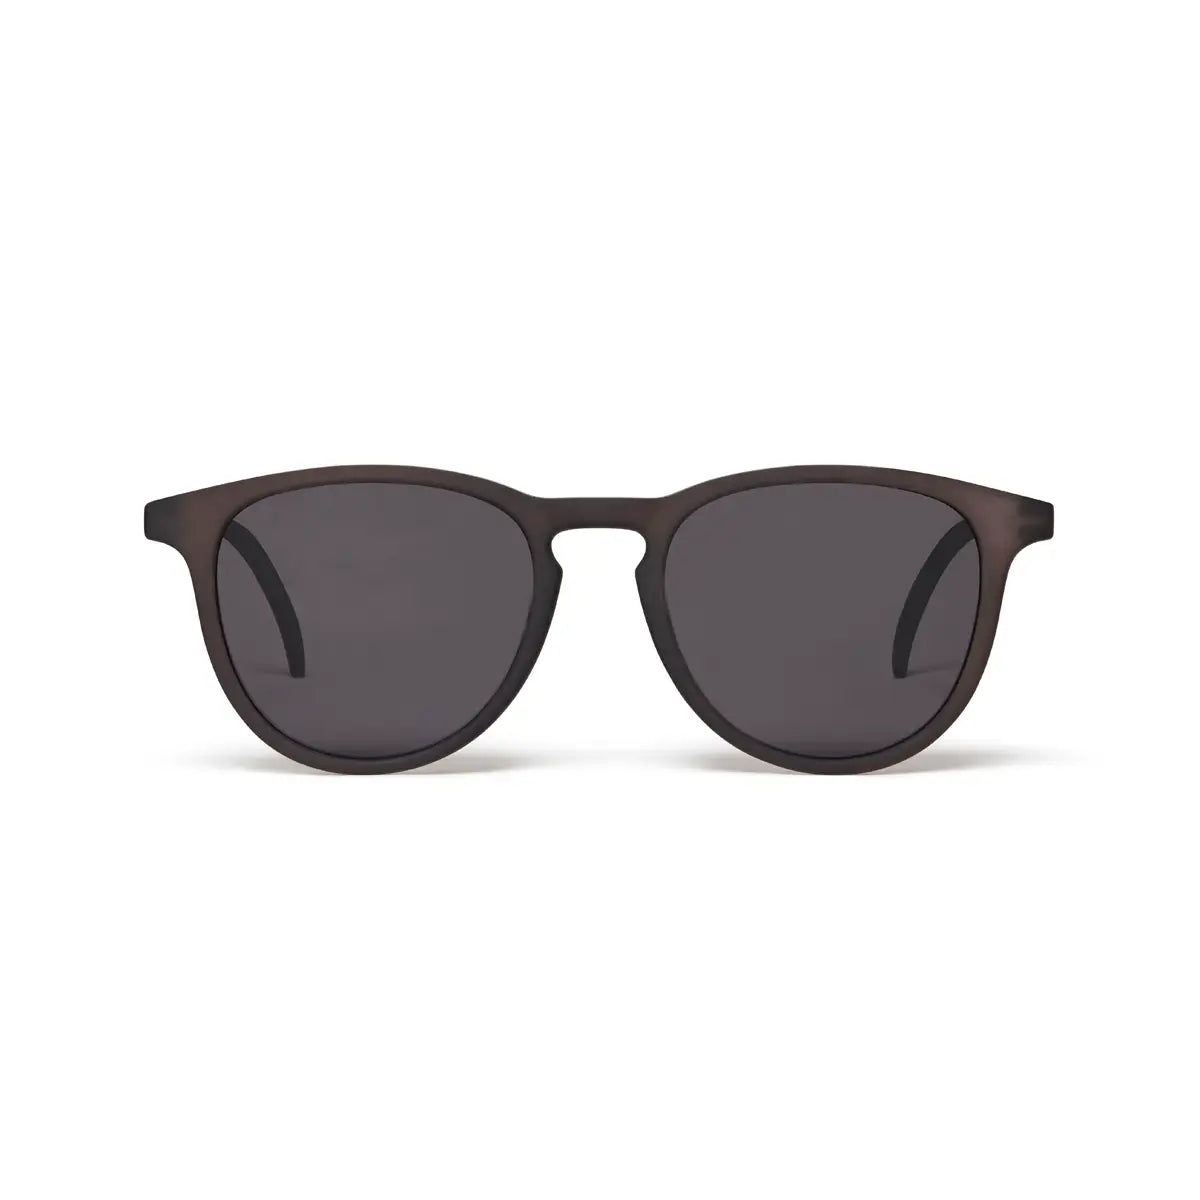 Toddler Polarized Sunglasses in Matte Black